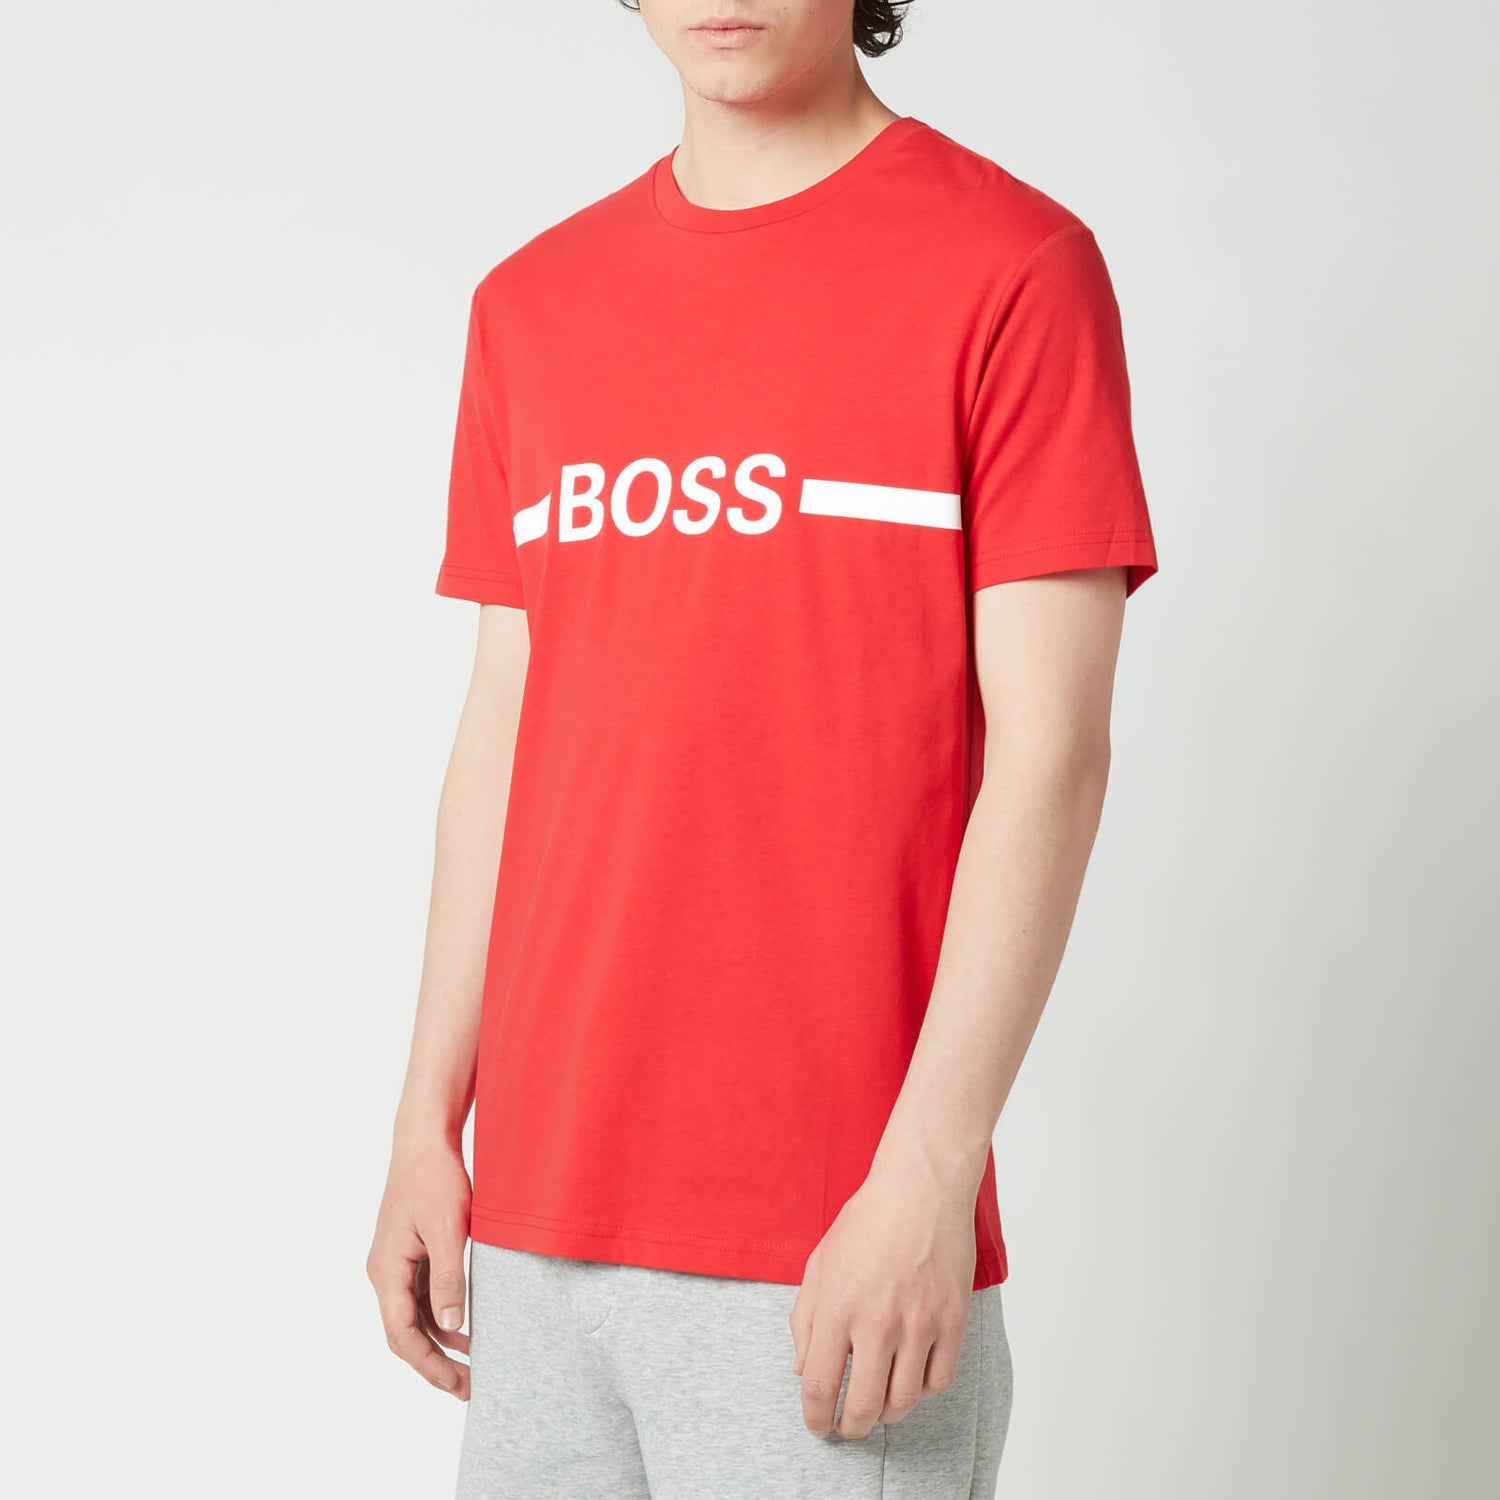 BOSS Beachwear Men's Sun Protection Slim Fit T-Shirt - Bright Red